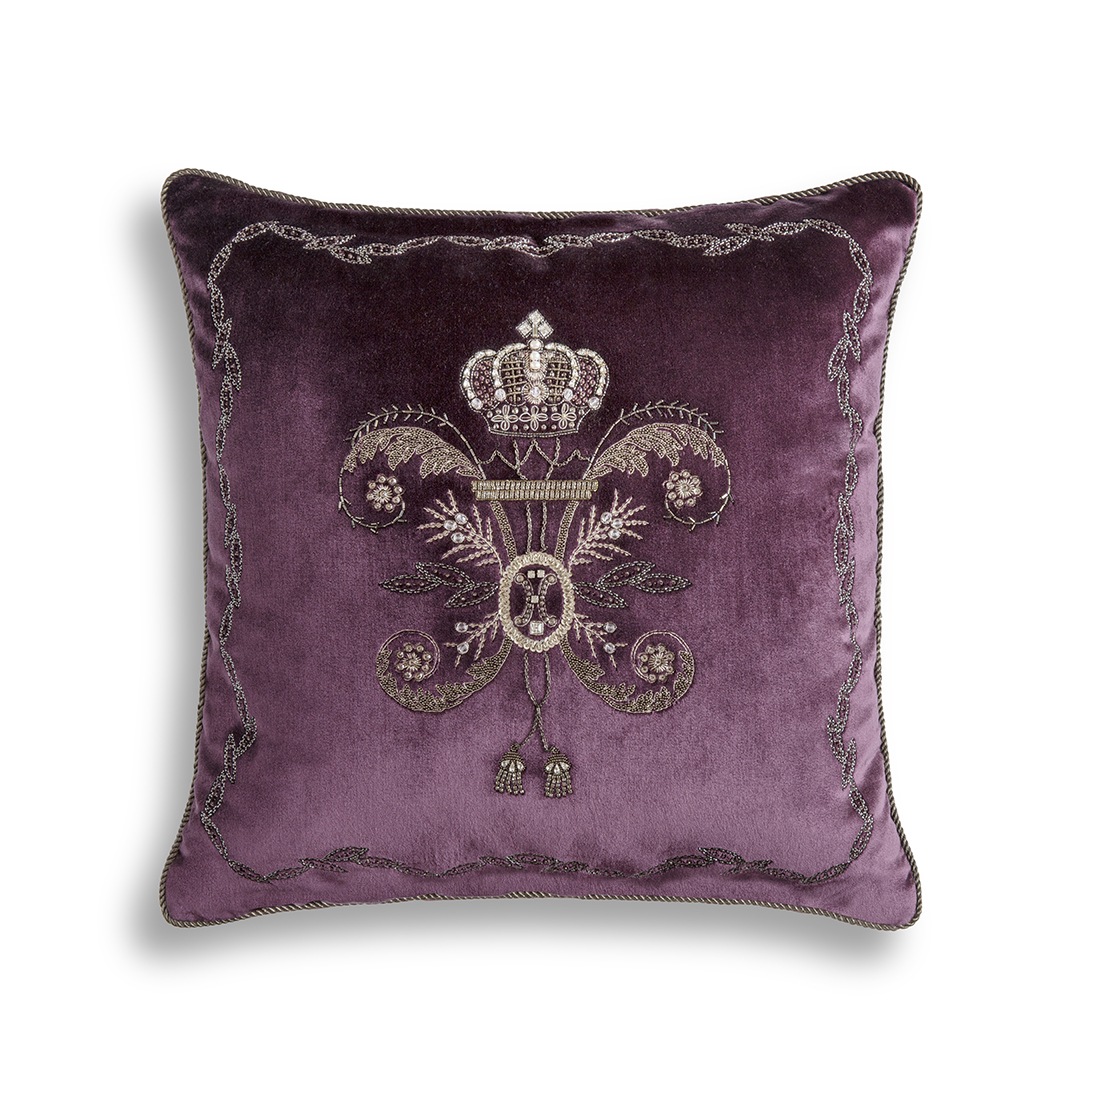 Imperatore cushion in Capri silk velvet - Amethyst - Beaumont & Fletcher